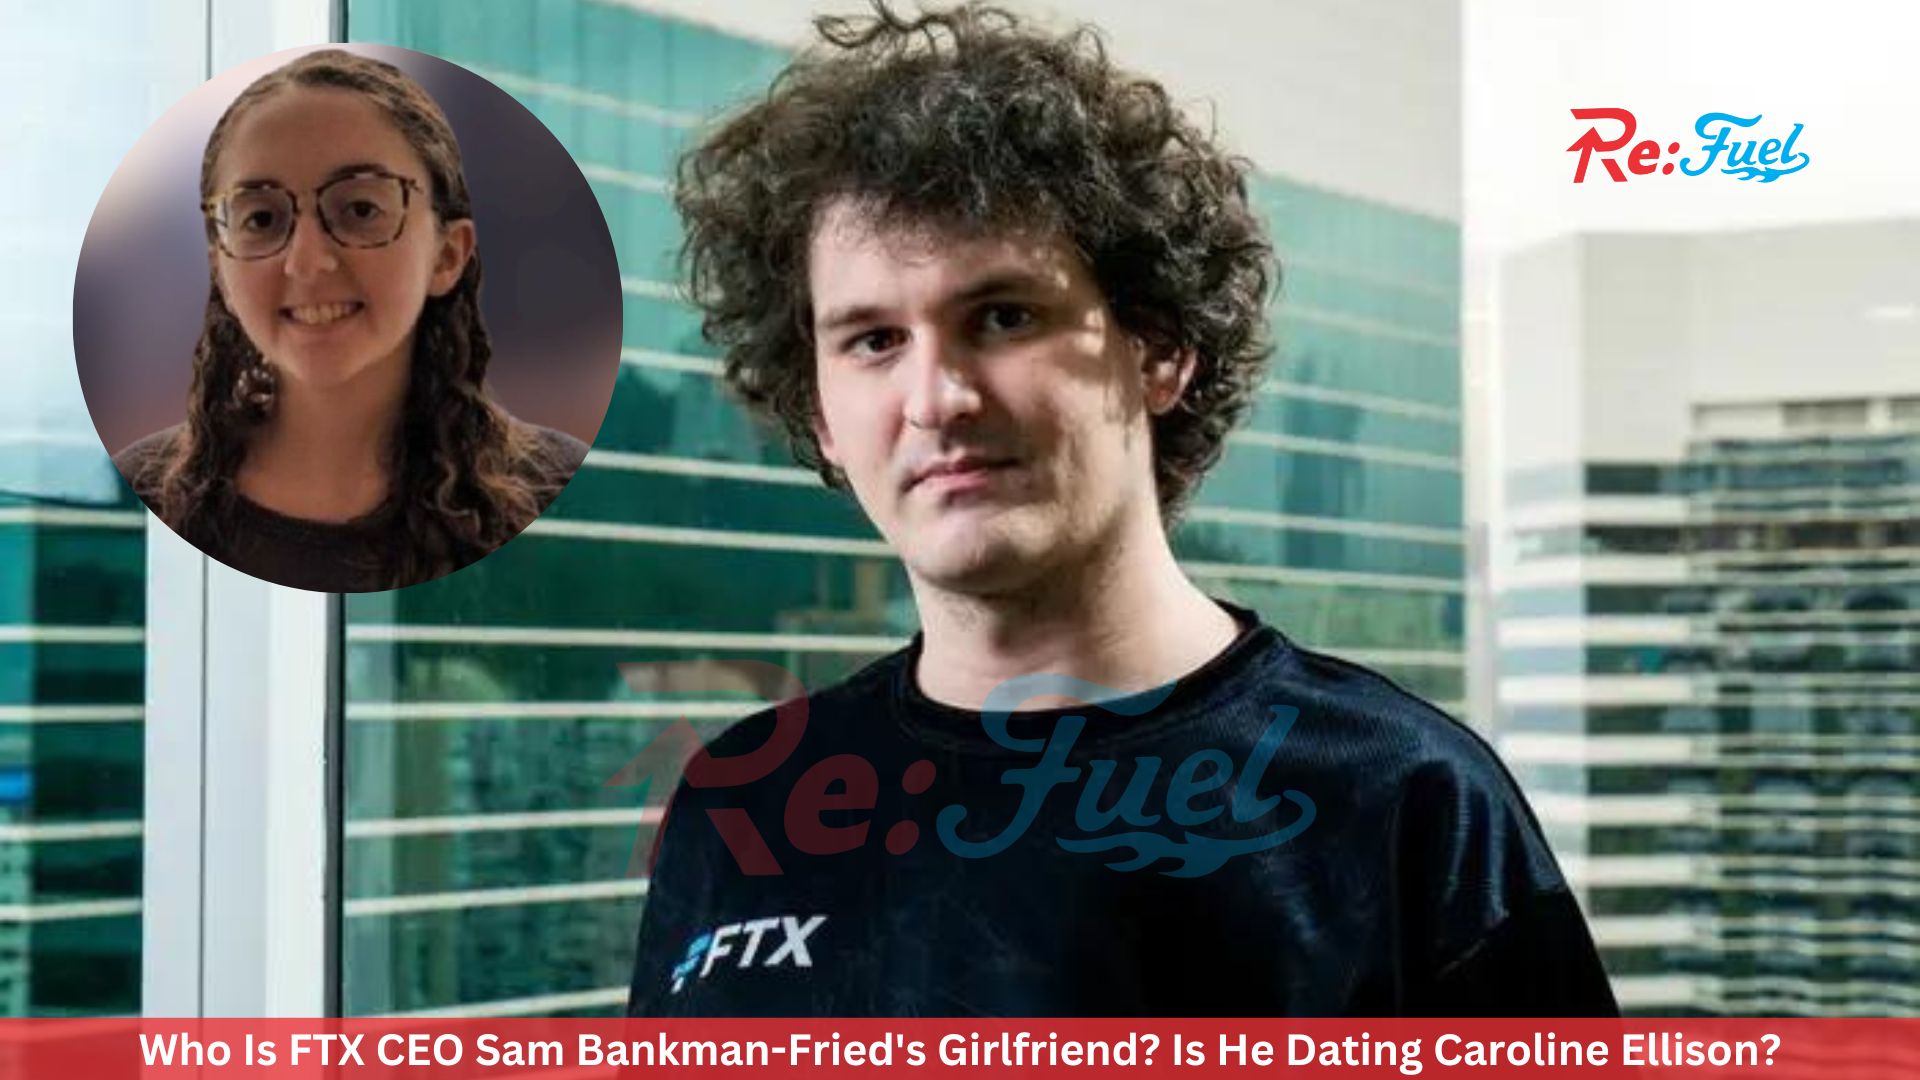 Who Is FTX CEO Sam Bankman-Fried's Girlfriend? Is He Dating Caroline Ellison?